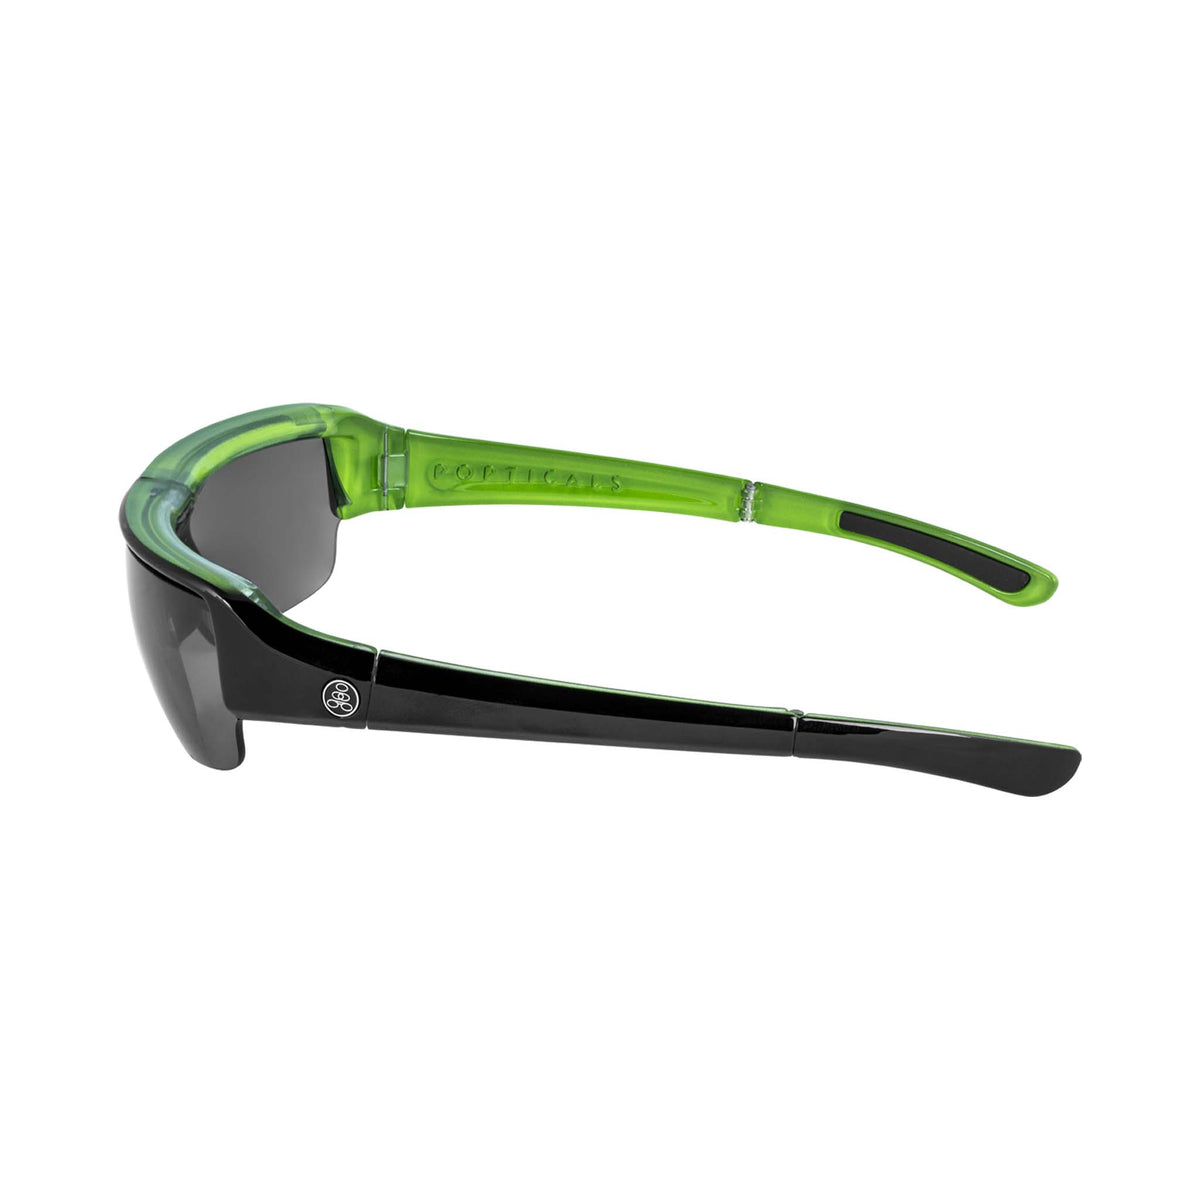 Popticals, Premium Compact Sunglasses, PopGun, 040010-GLGP, Polarized Sunglasses, Gloss Black over Green Crystal Frame, Gray Lenses, Side View